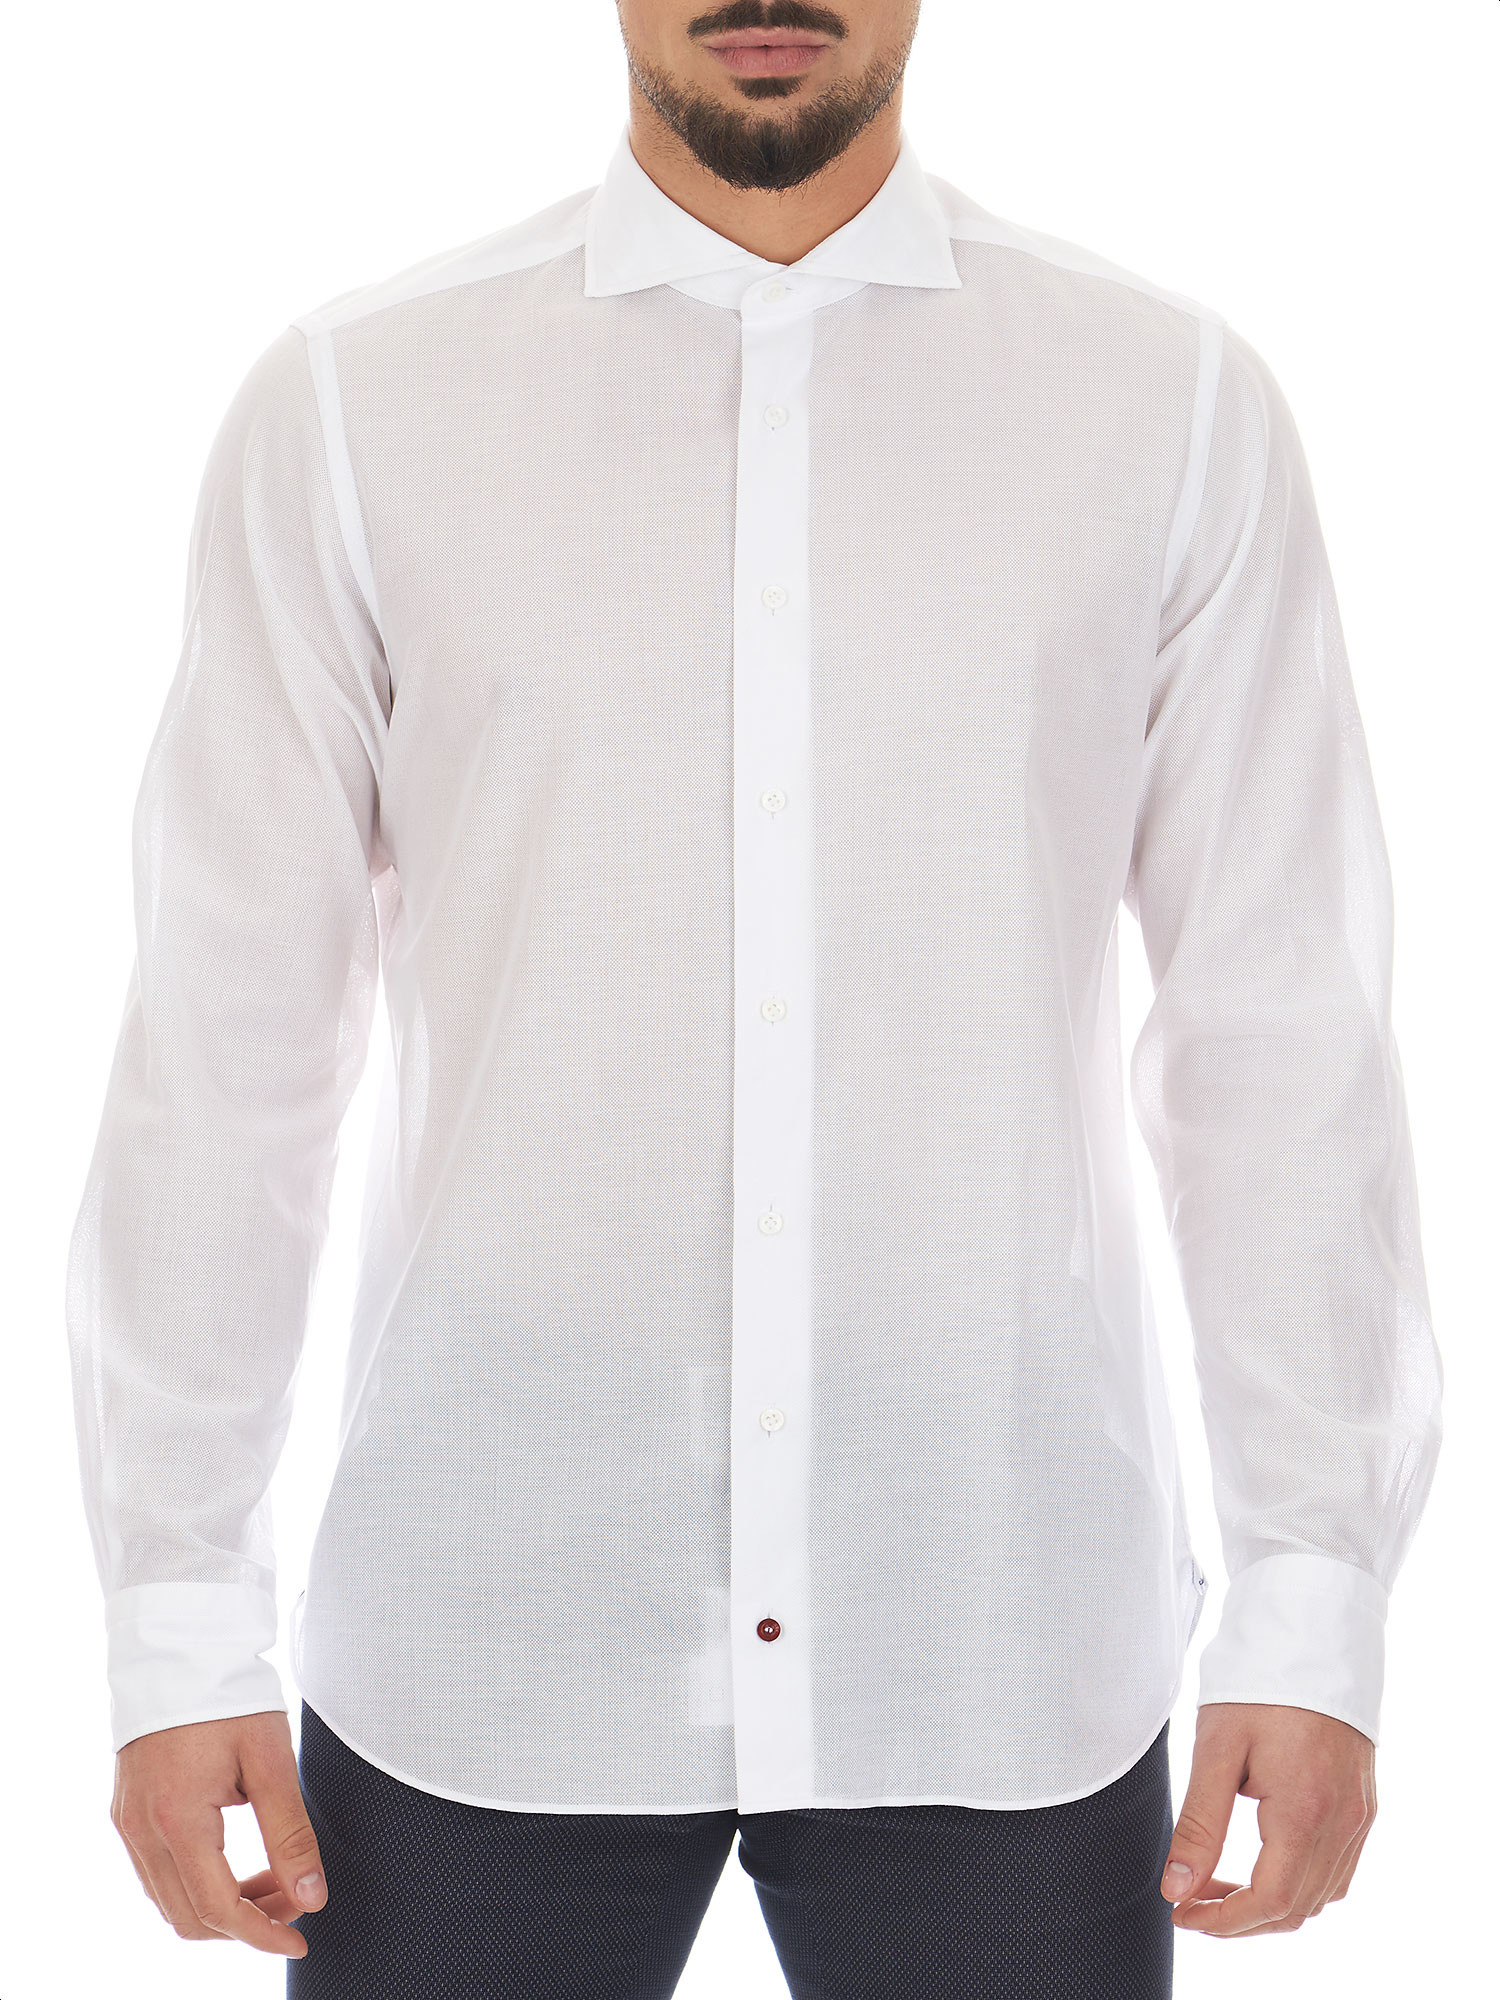 Solid white shirt with cutaway-collar - Càrrel